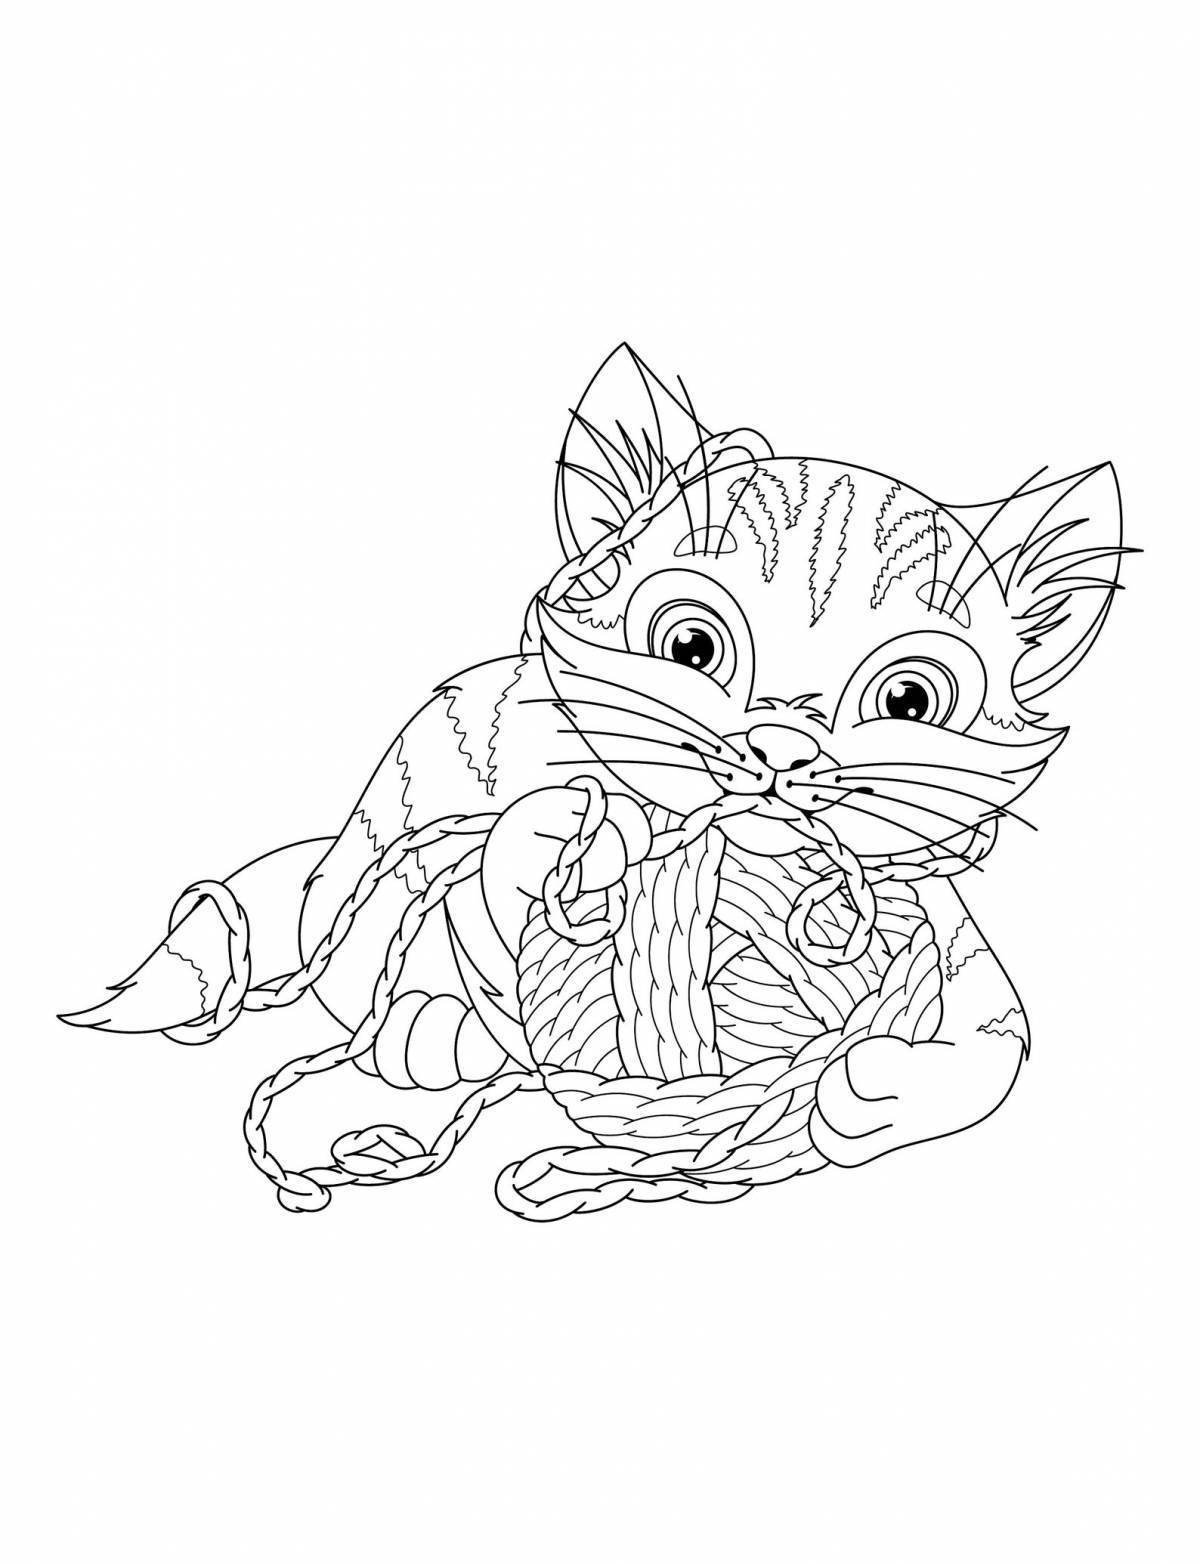 Coloring book fluffy tabby kitten